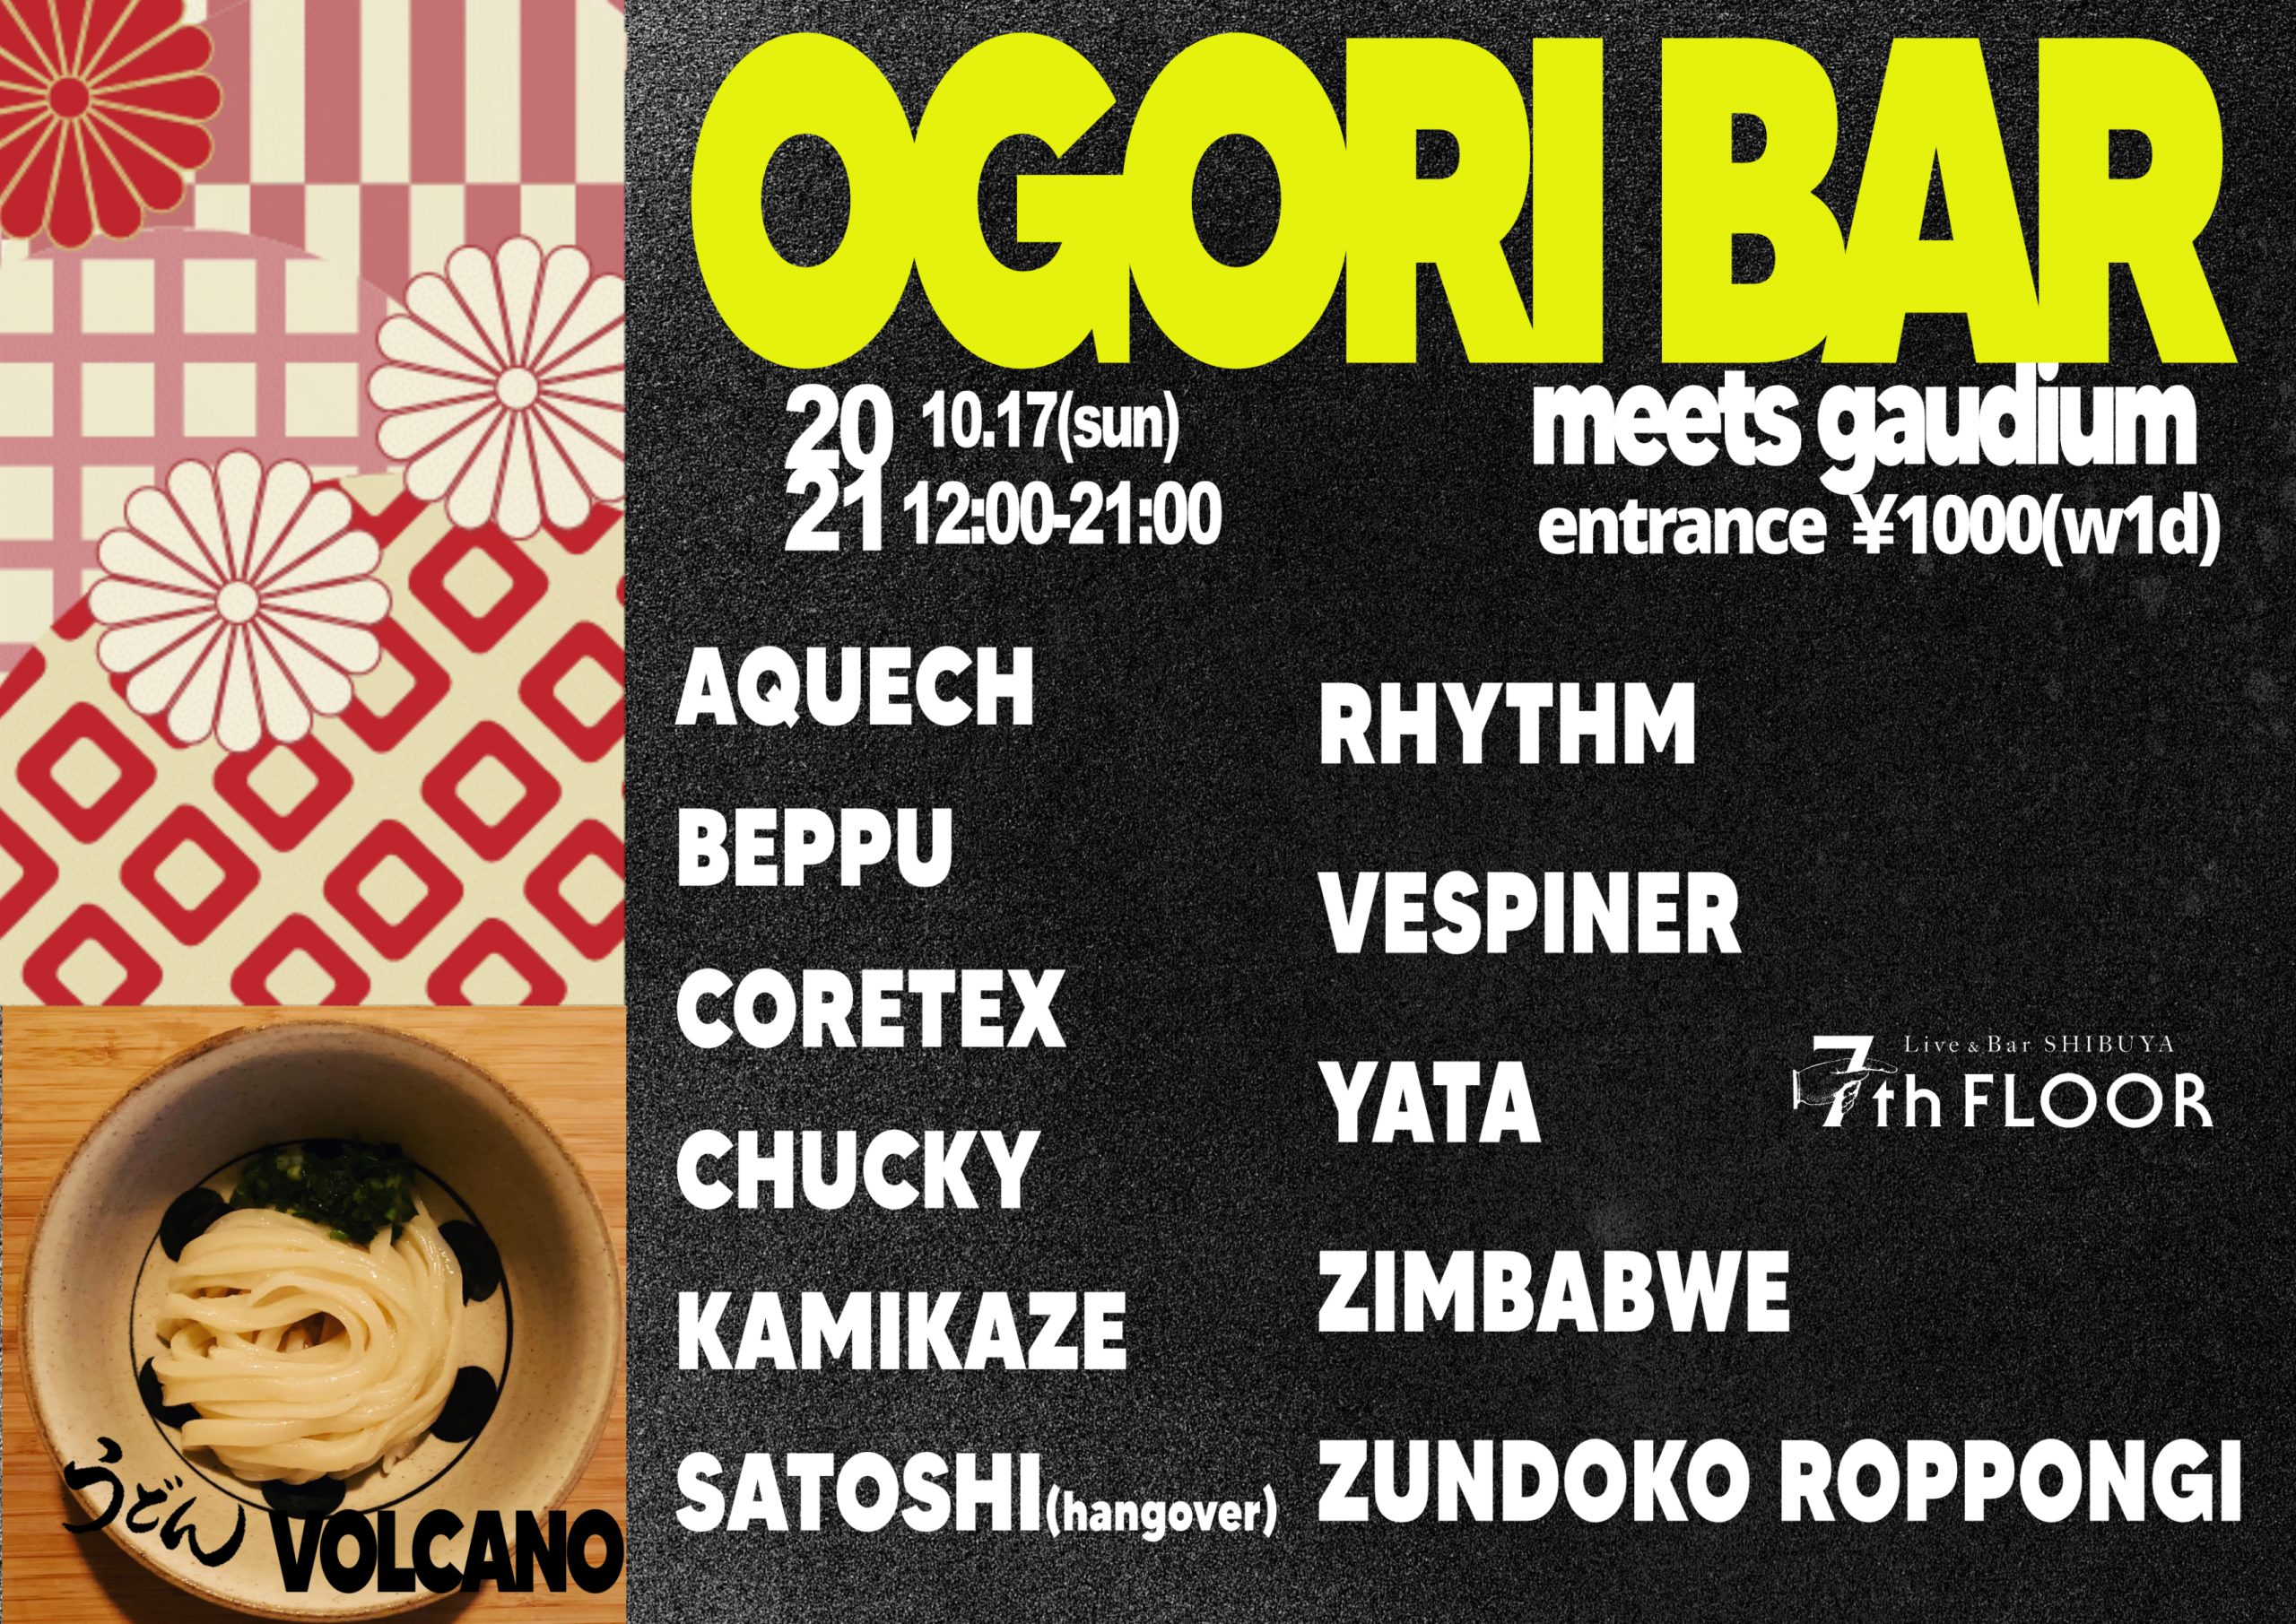 「ogori bar」 meets gaudium -テクノとドラムンとウドン-